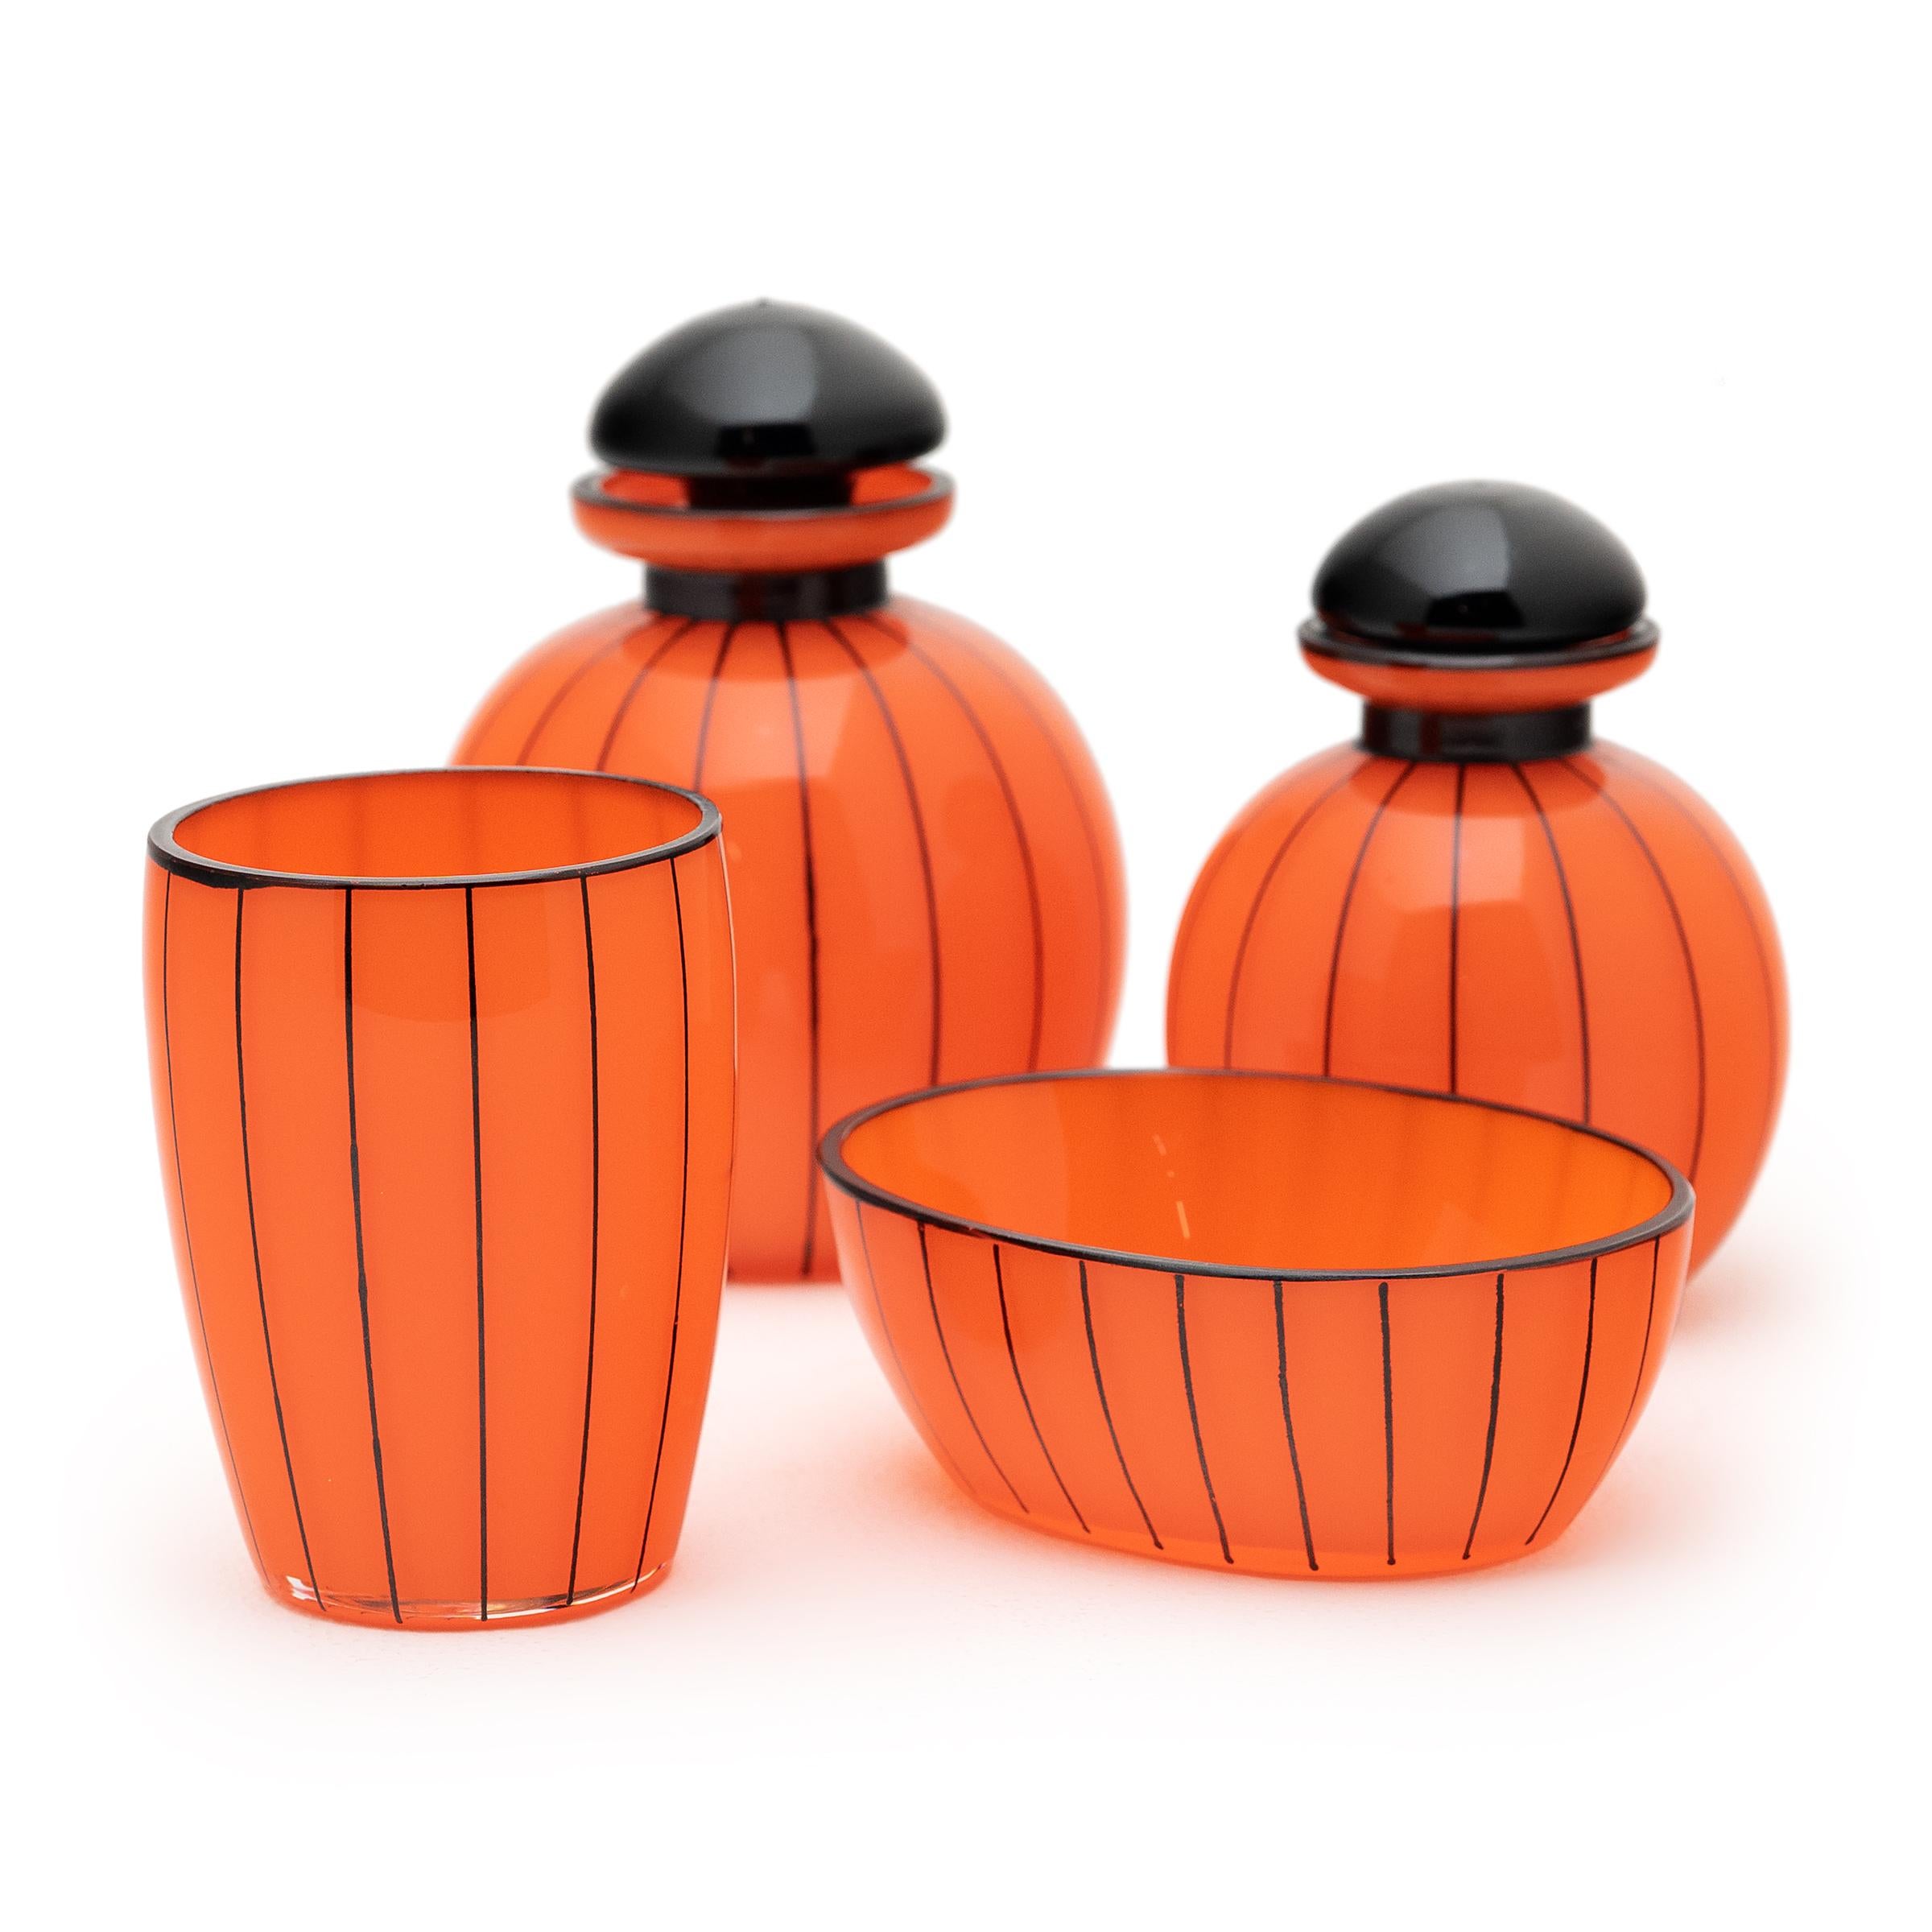 European Art Deco Orange Tango Glass Set by Michael Powolny for Loetz, c. 1920 For Sale